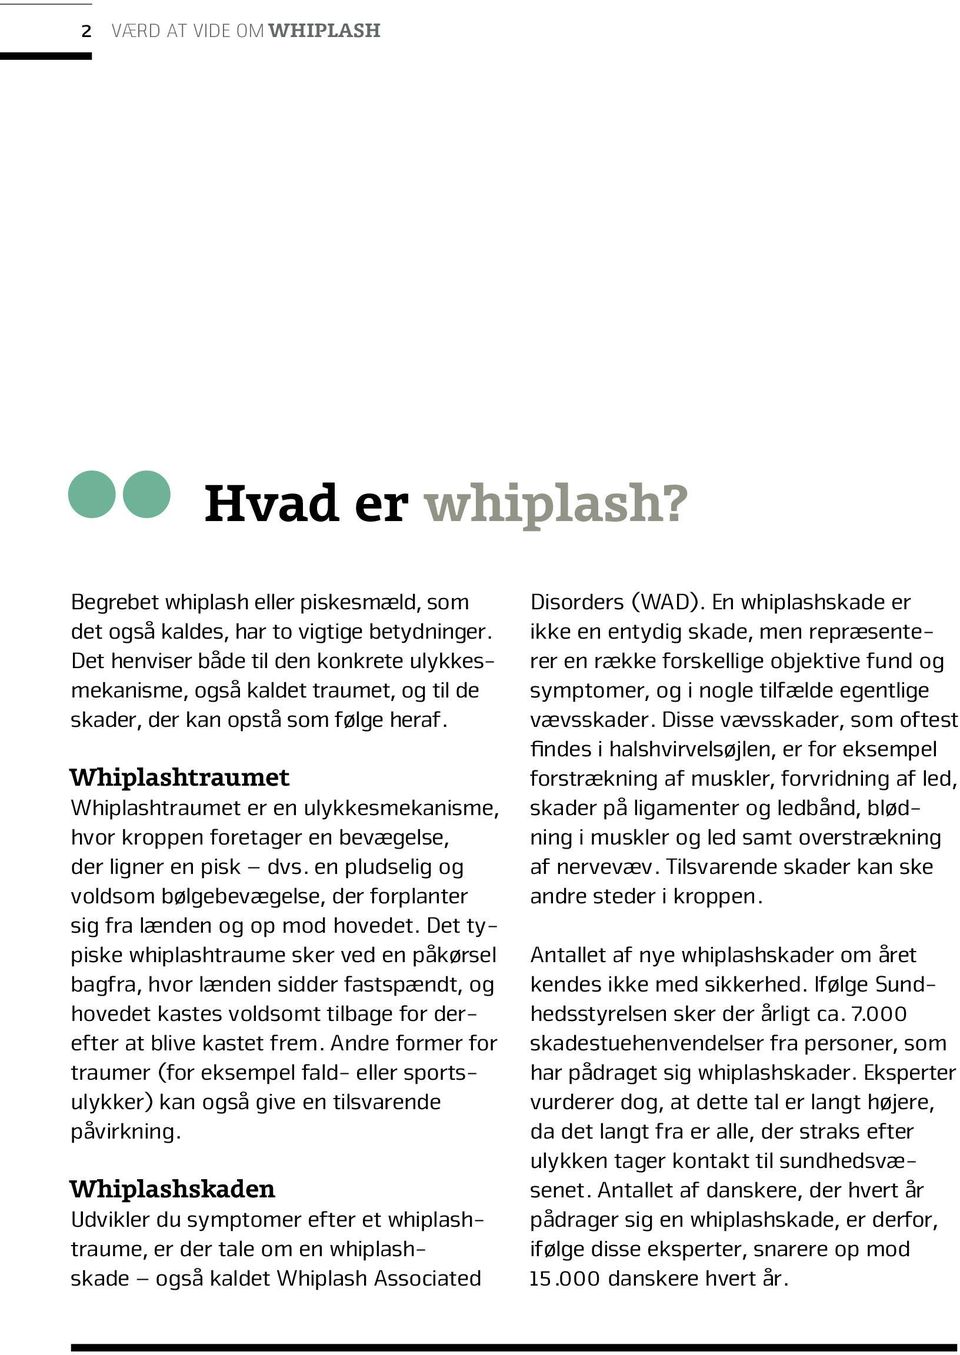 Whiplashtraumet Whiplashtraumet er en ulykkesmekanisme, hvor kroppen foretager en bevægelse, der ligner en pisk dvs.